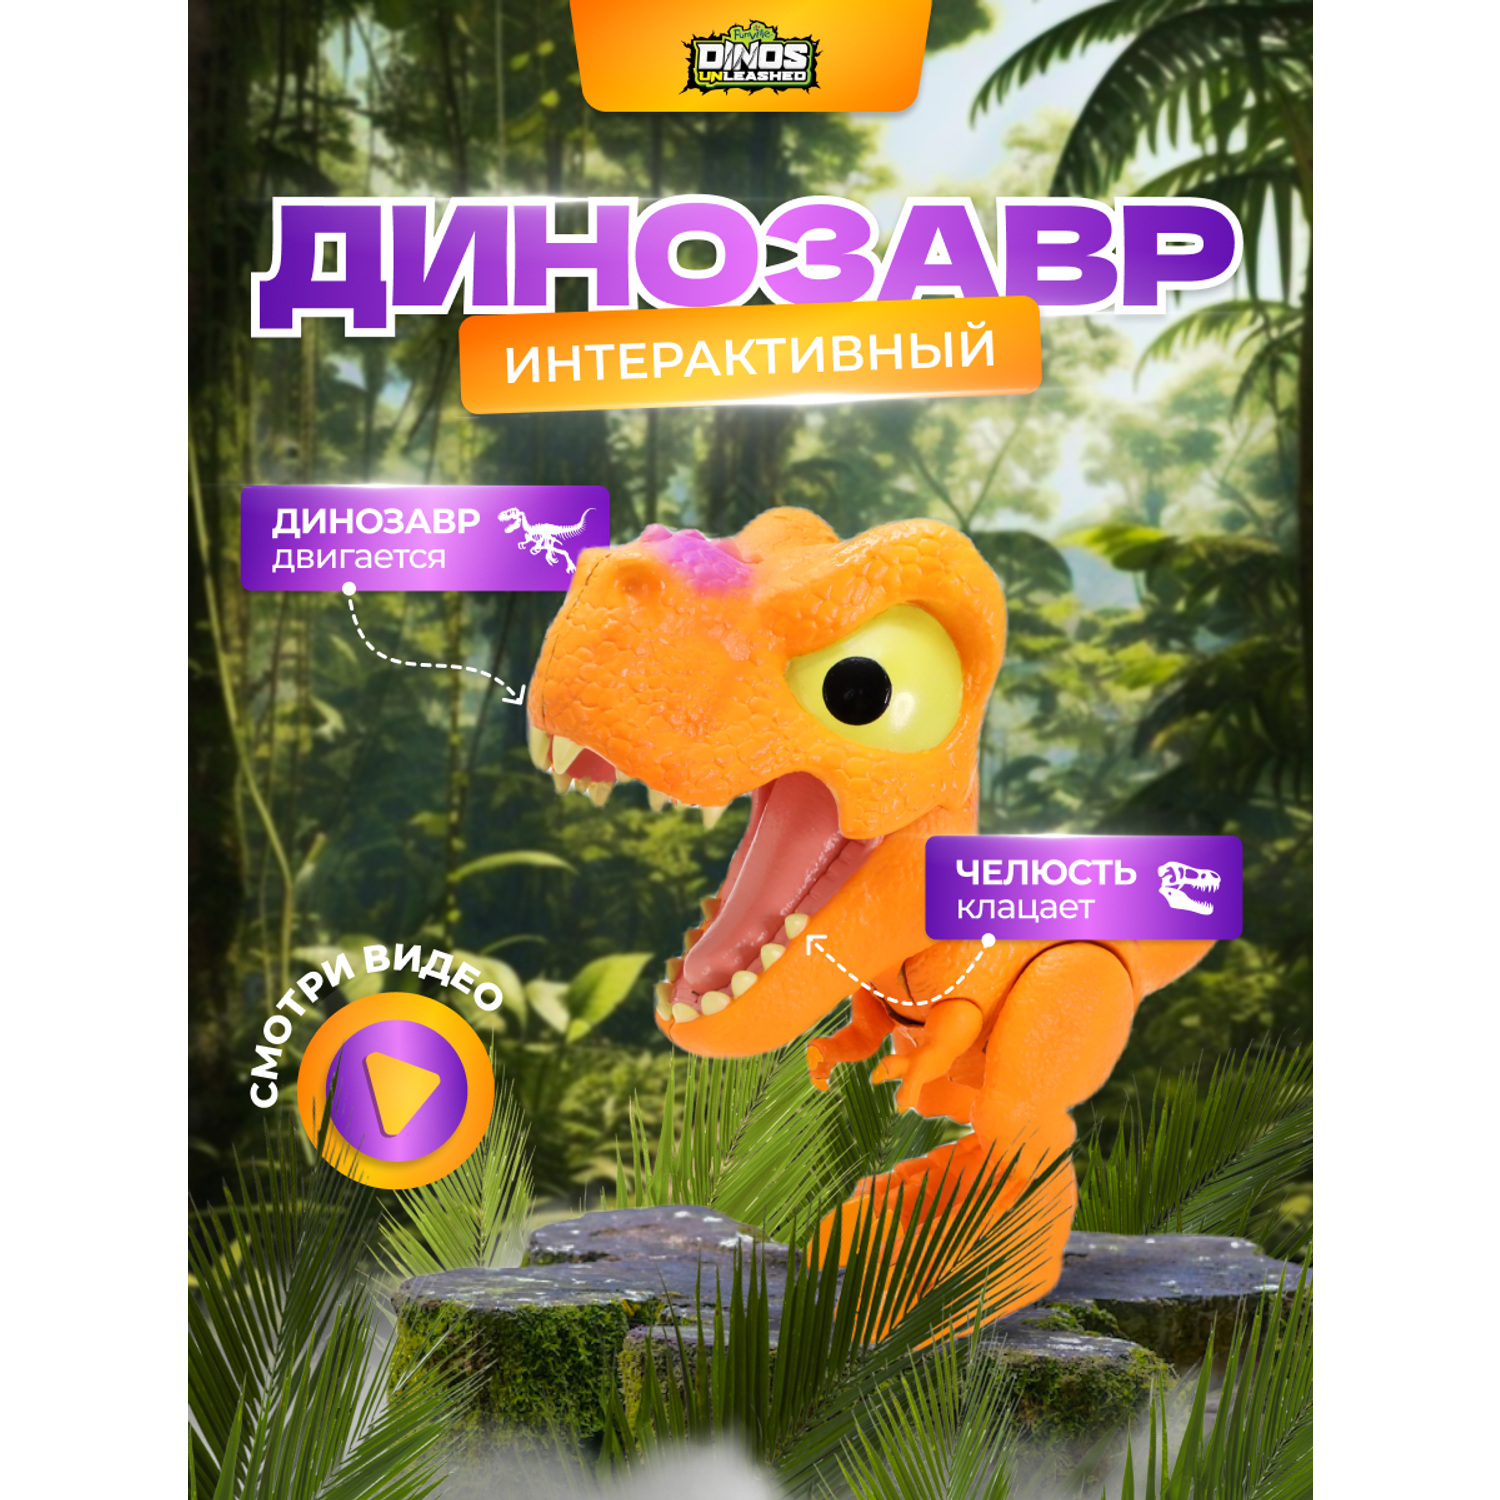 Фигурка динозавра Dinos Unleashed клацающий тираннозавр мини - фото 10